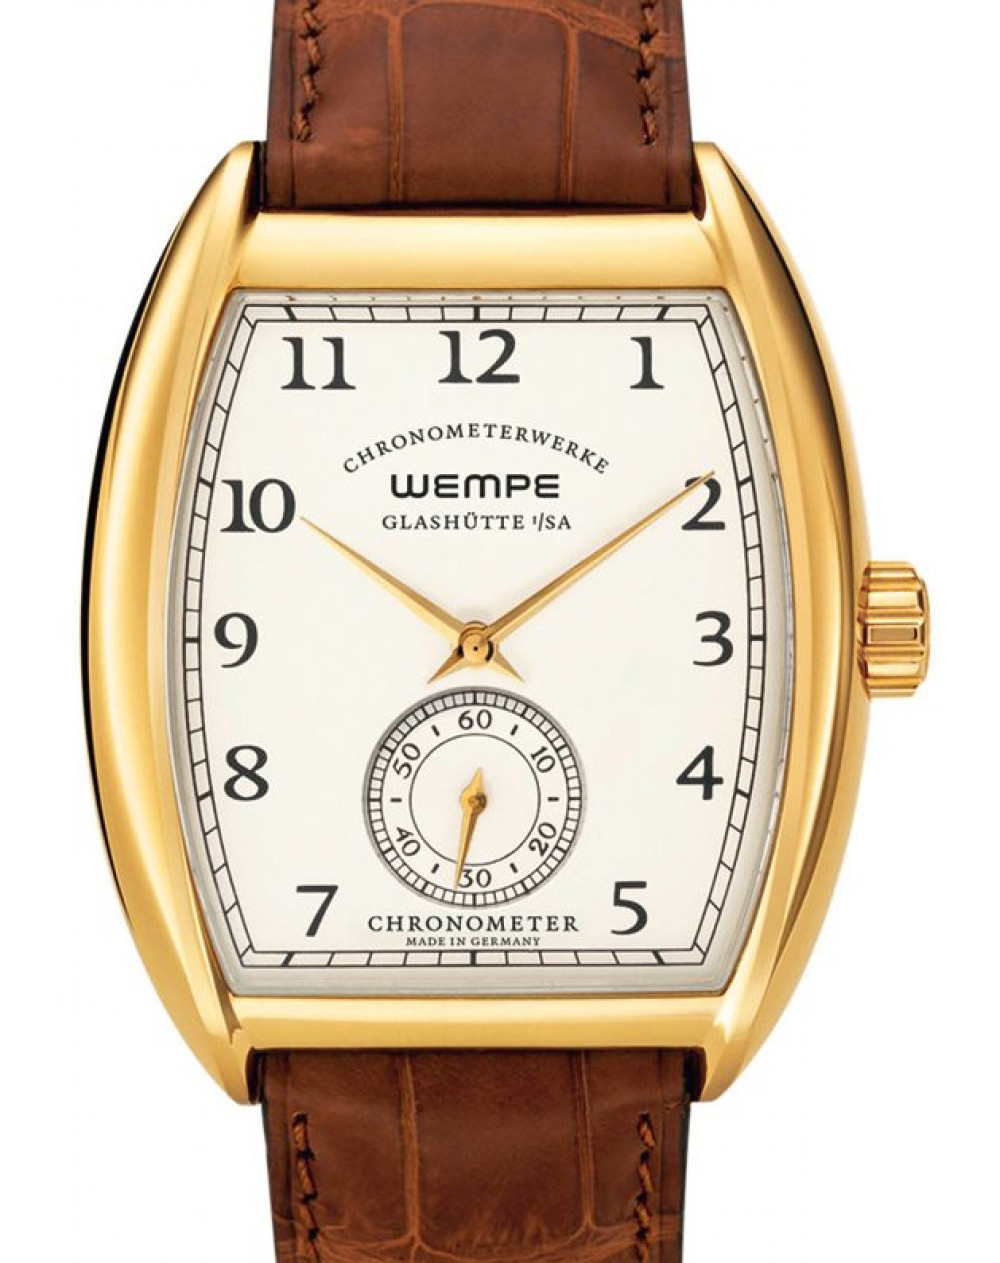 Zegarek firmy Wempe, model Chronometerwerke